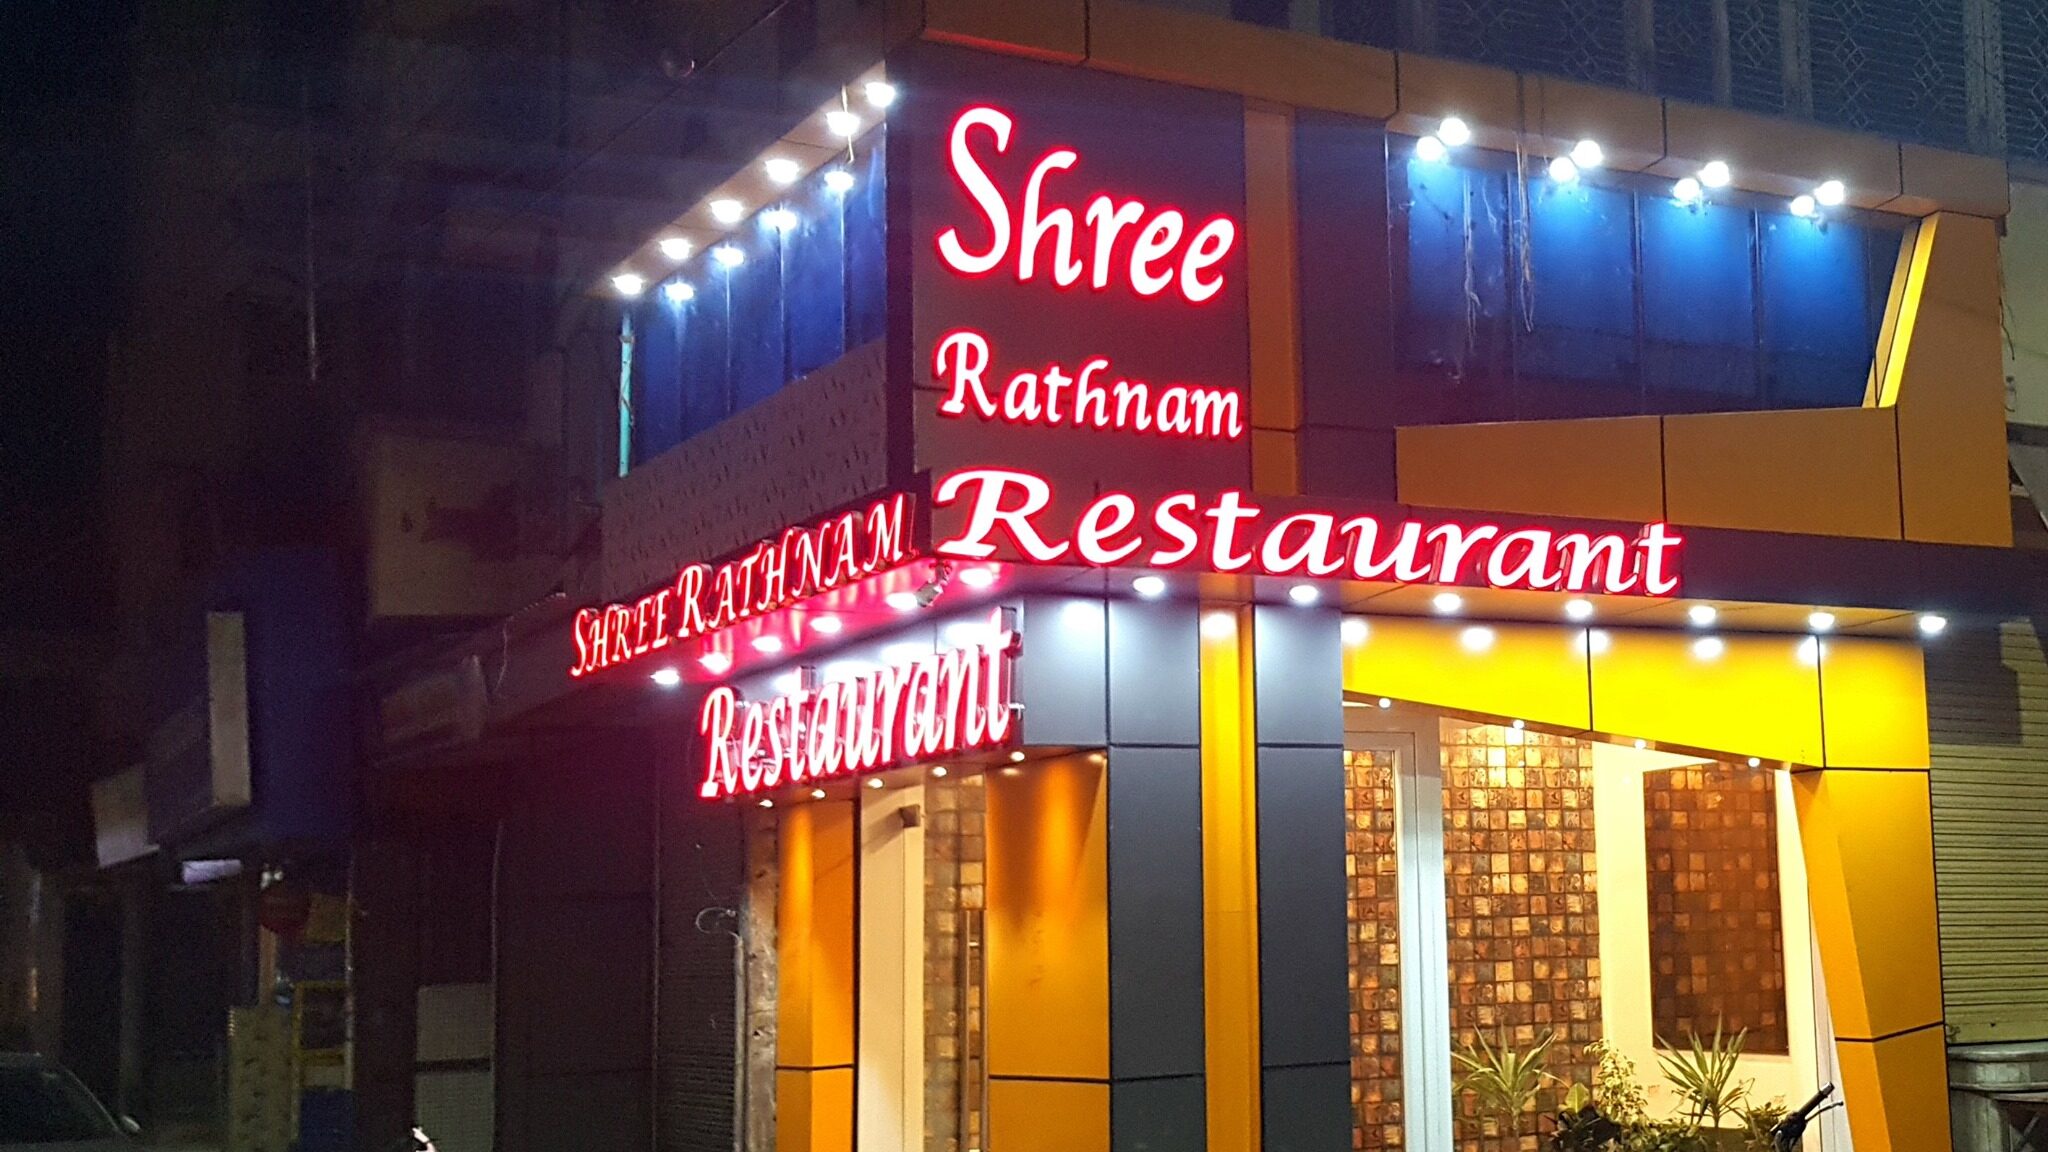 Shree Rathnam is one of the most popular vegetarian restaurants in Delhi.